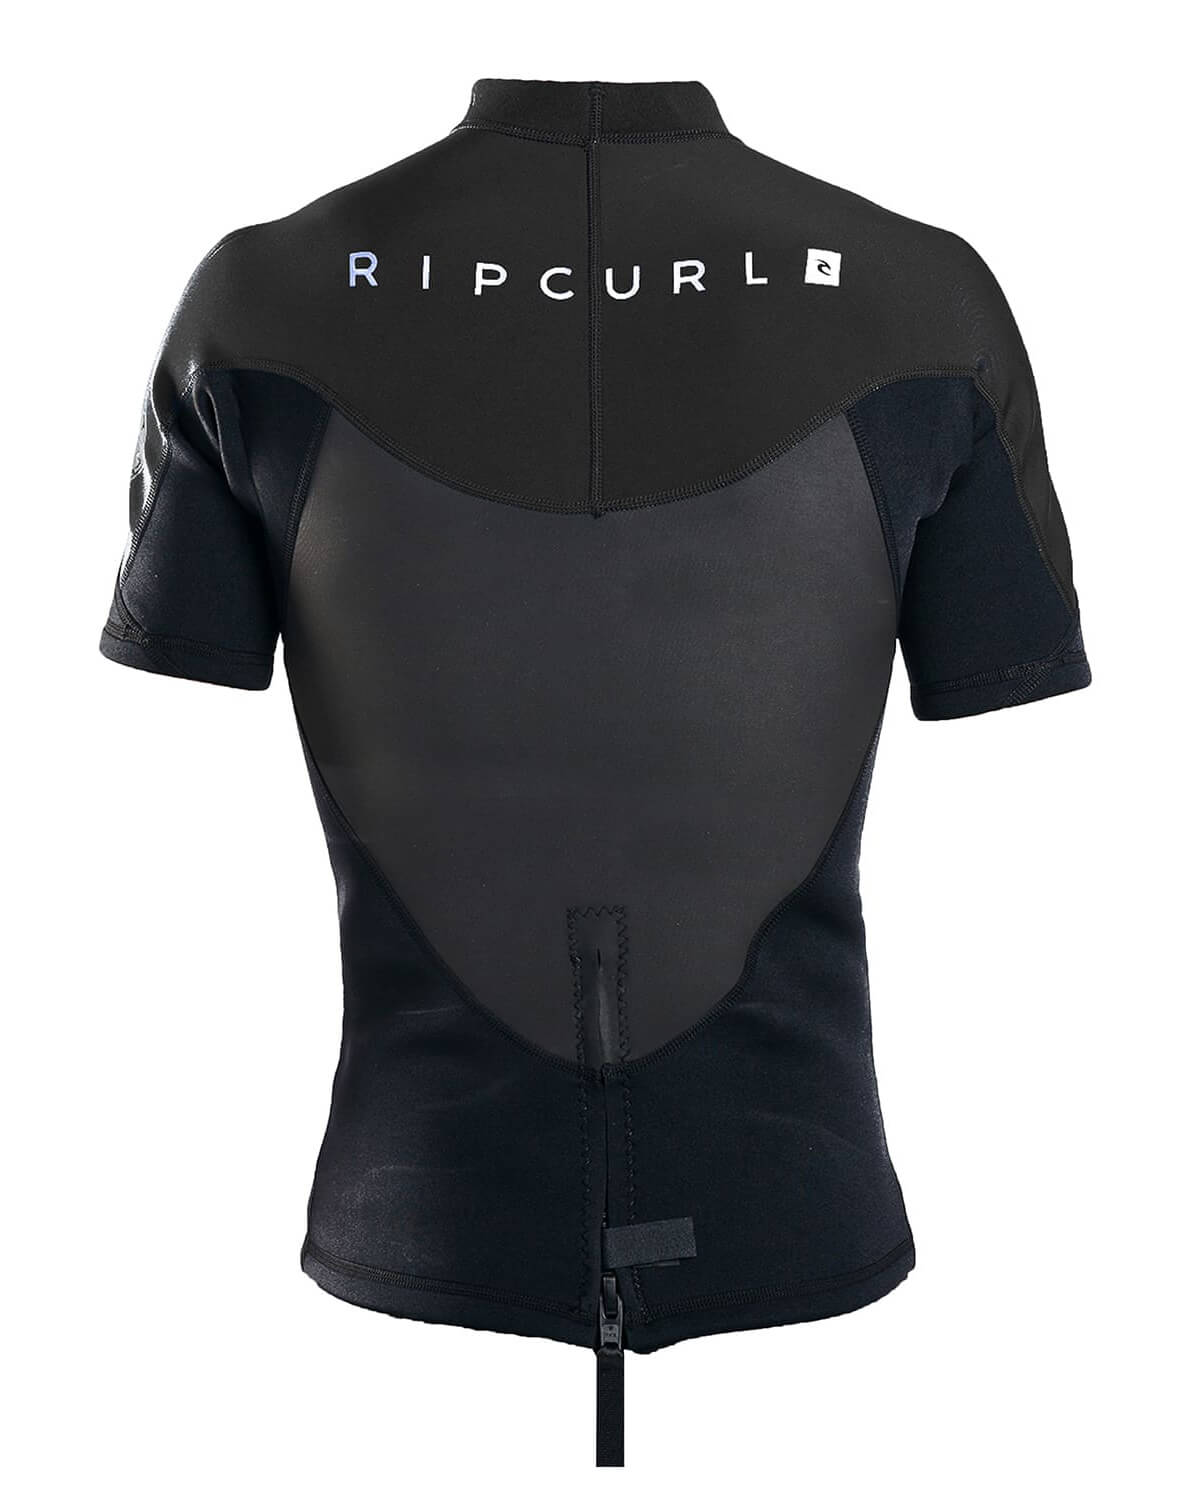 1.5mm Men's Rip Curl OMEGA S/S Wetsuit Jacket